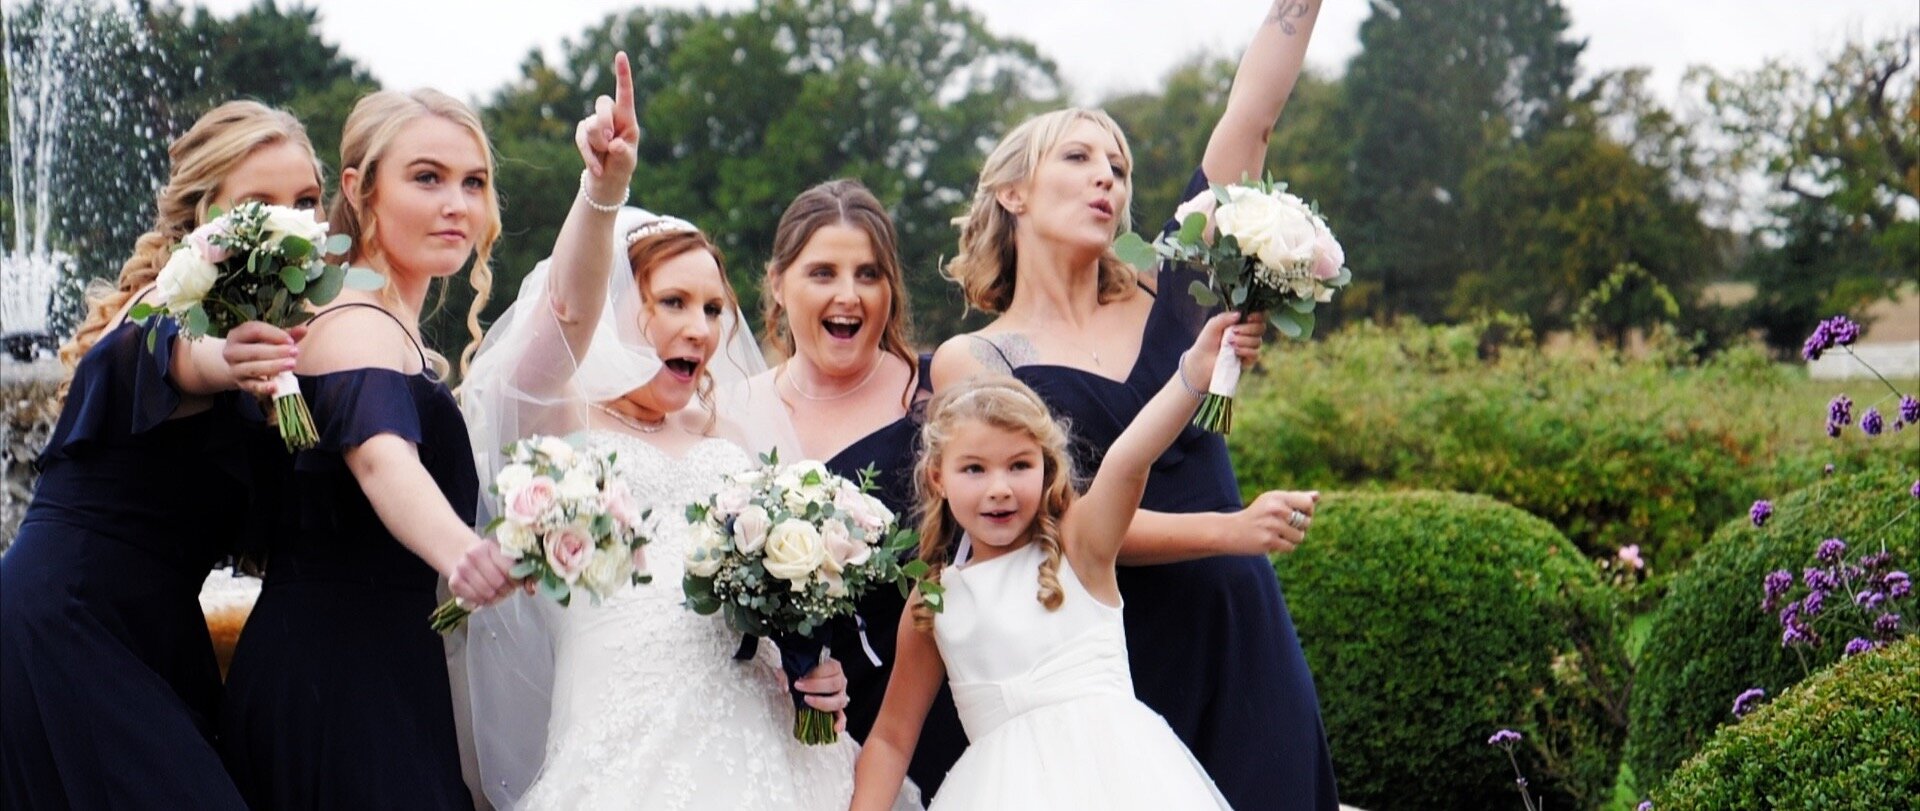 Fun Brides at Quendon Hall Essex.jpg